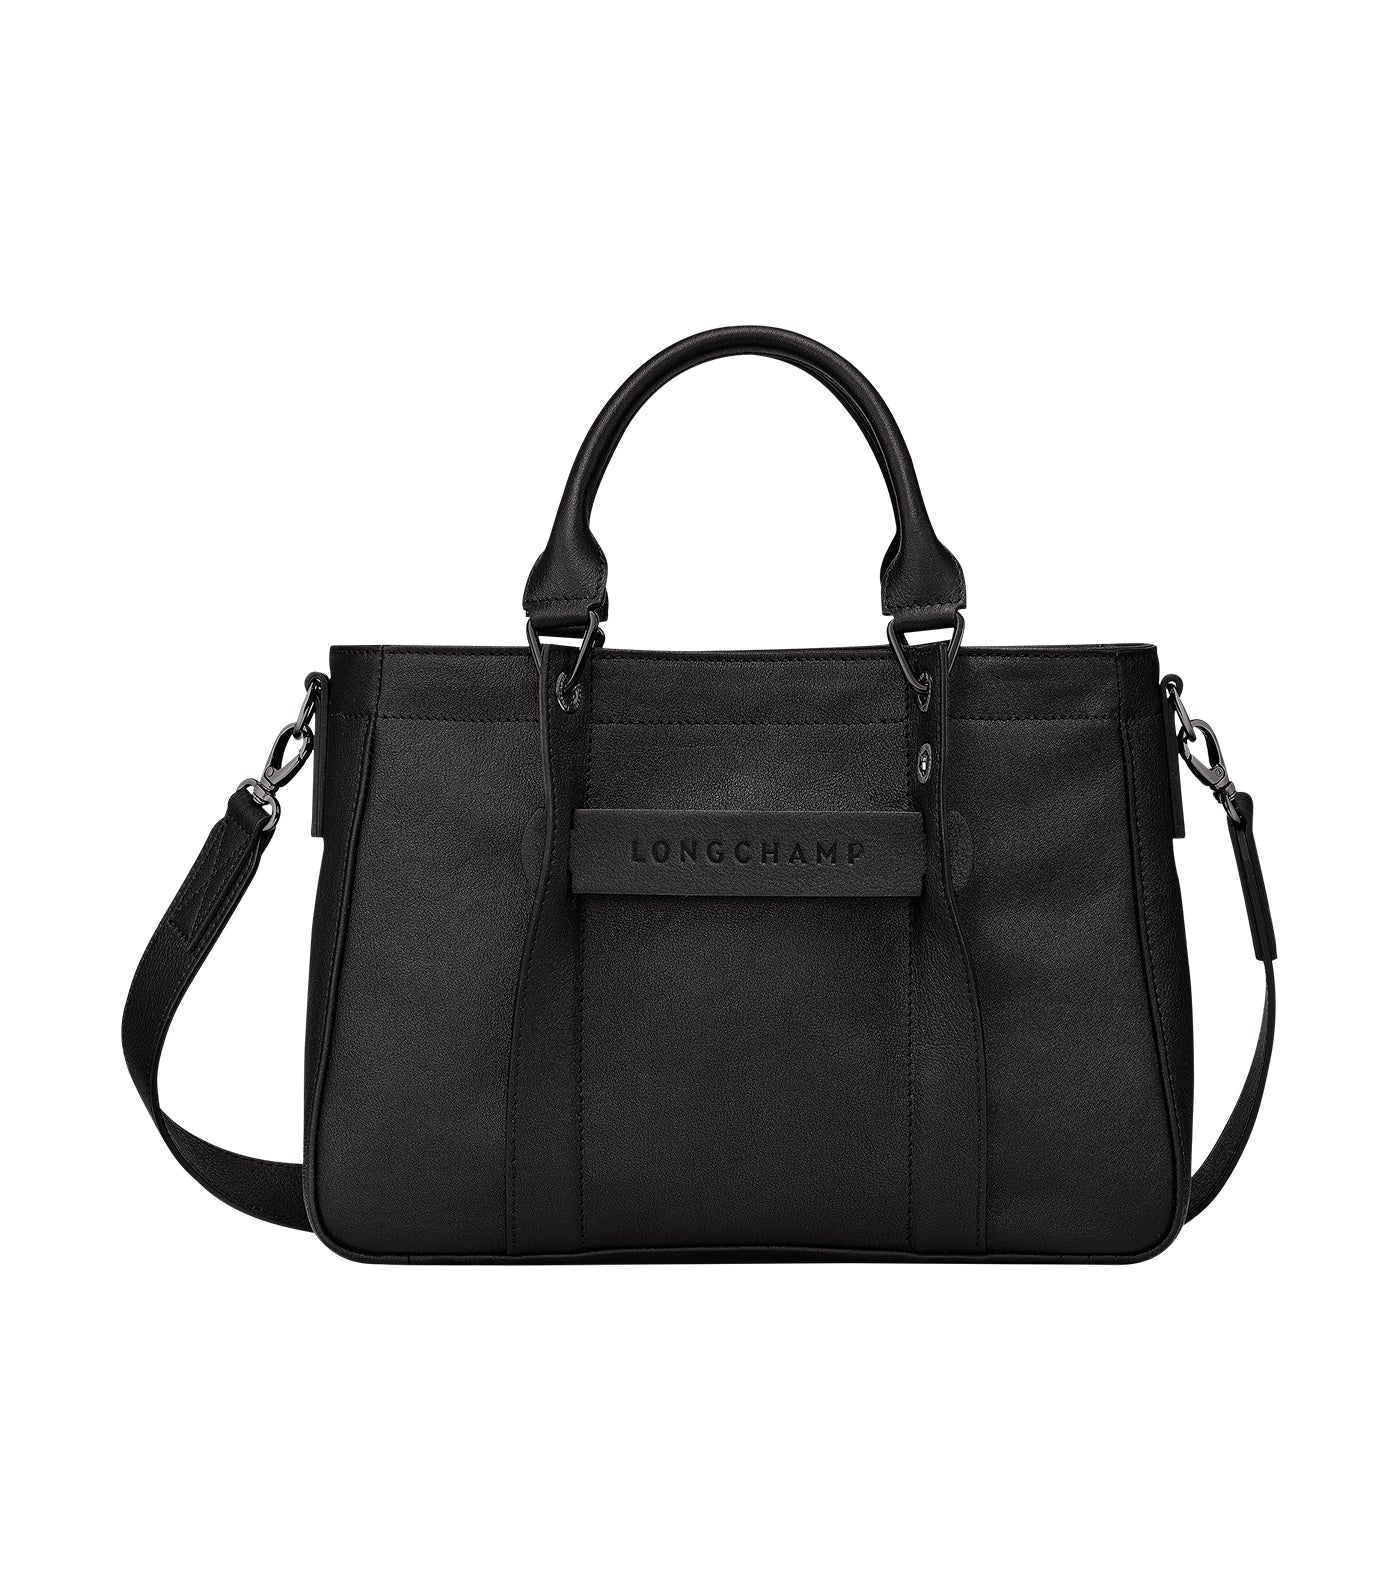 Longchamp 3d Logo Crossbody Bag in Black